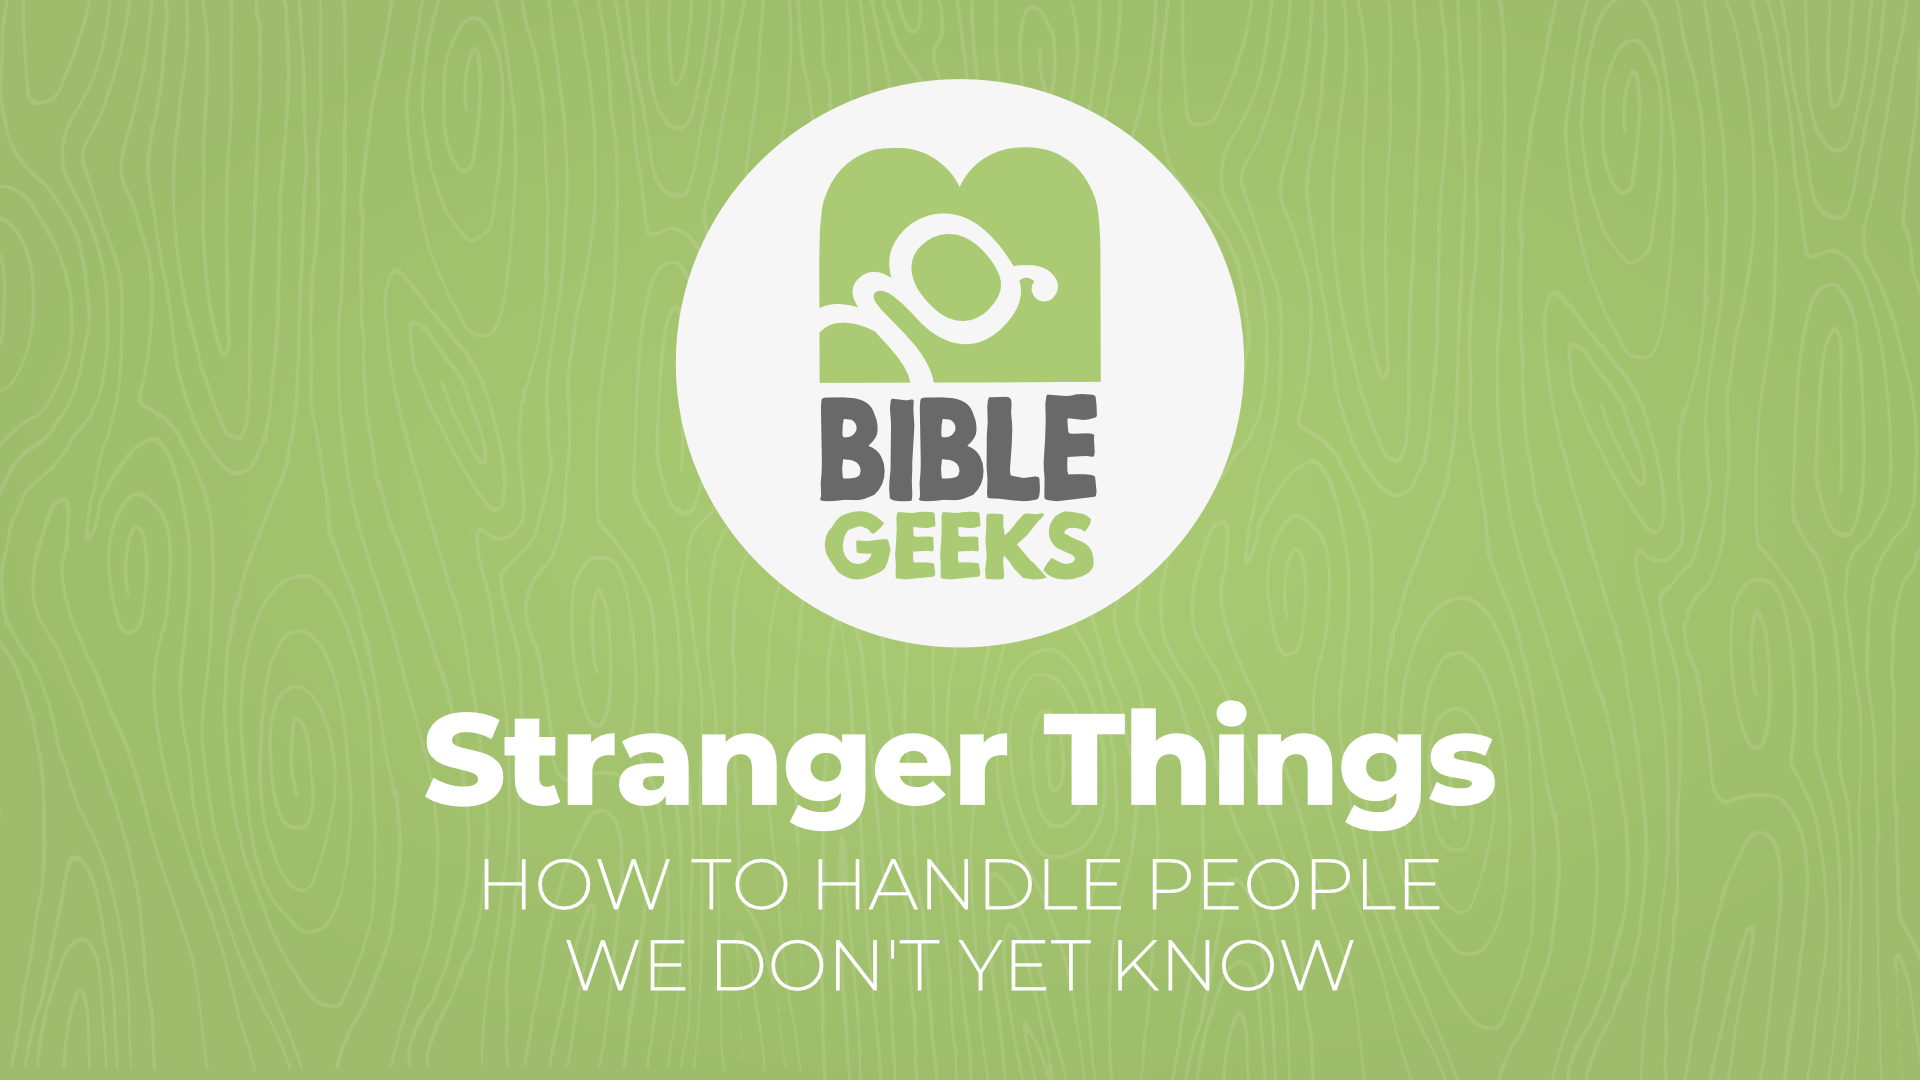 bibleGeeksSeriesPosterTemplate-StrangerThings.png